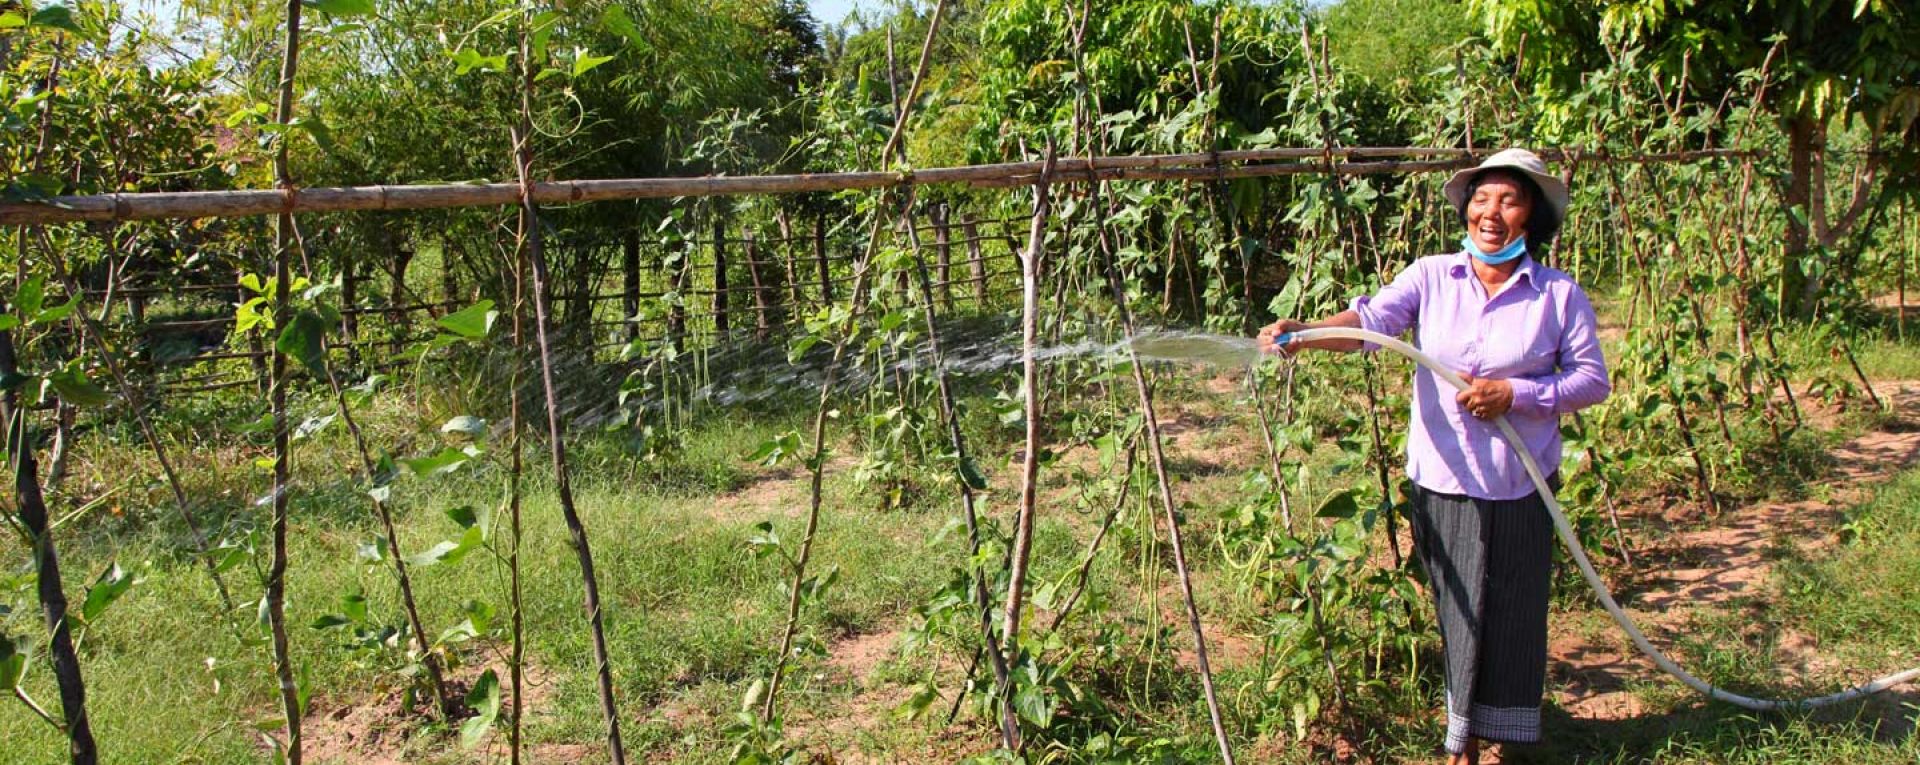 Cambodian farmer watering crops